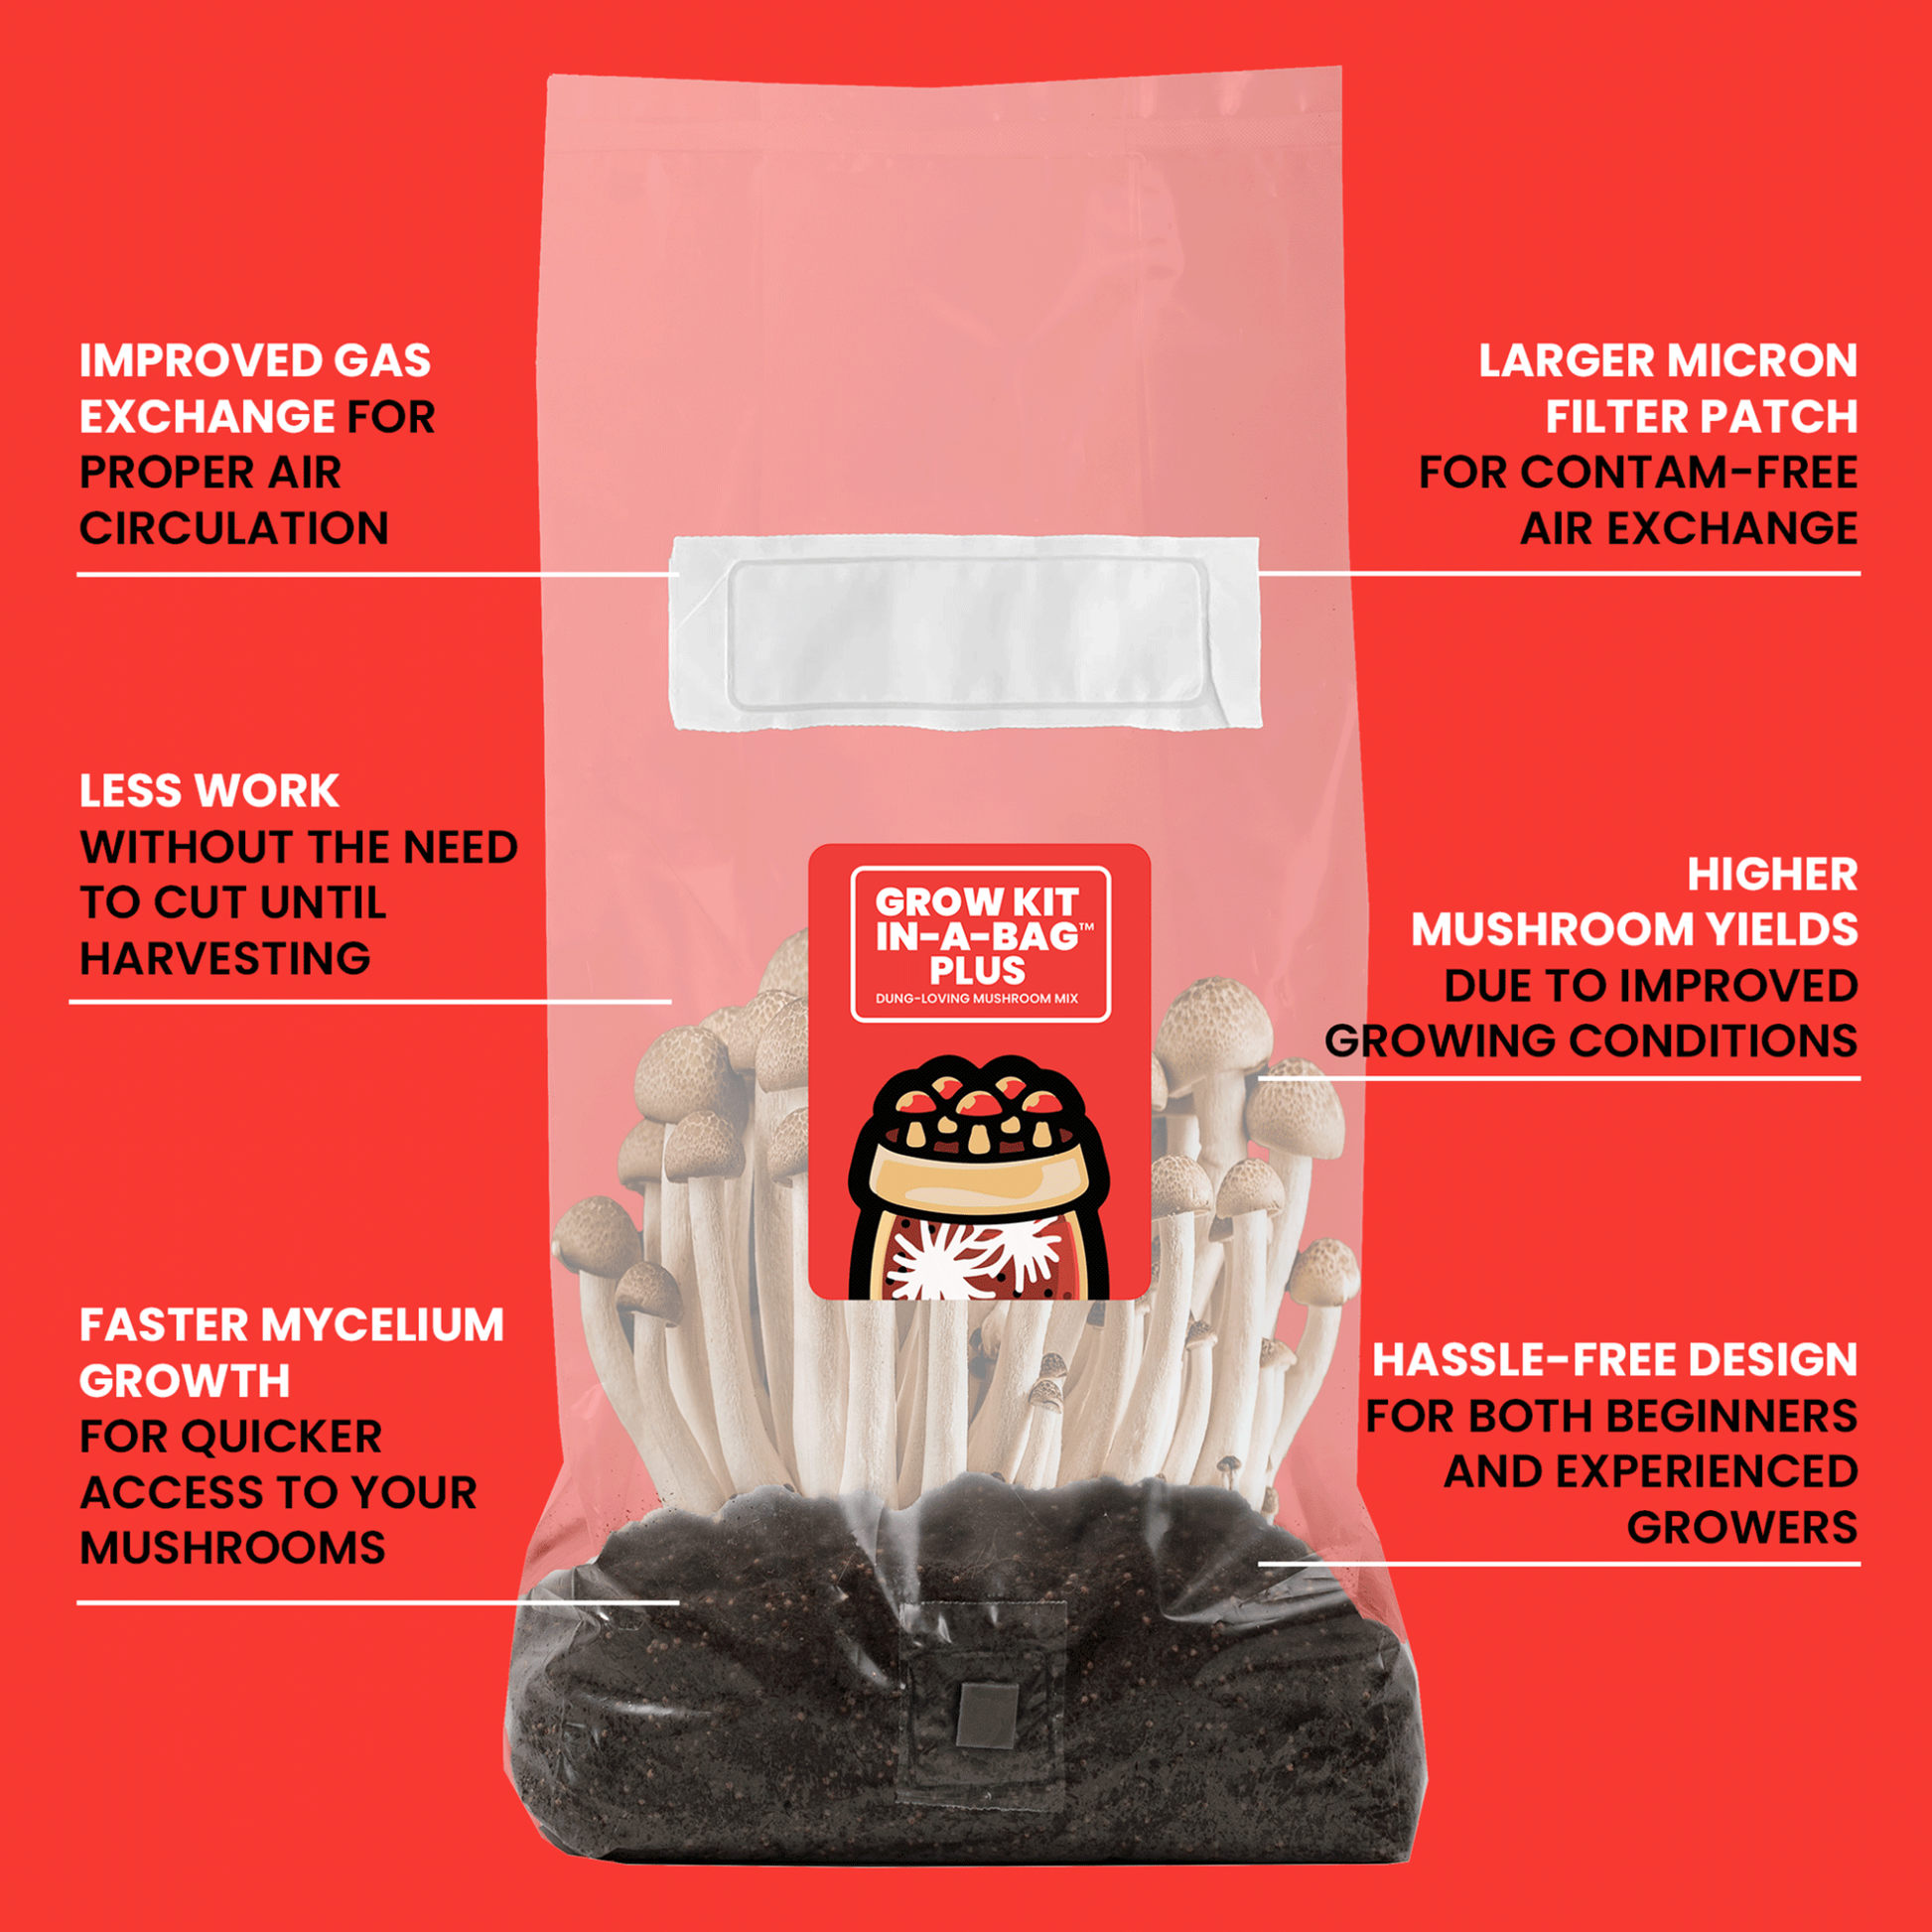 MushroomSupplies Grow Kit In-A-Bag PLUS, 5 Lb